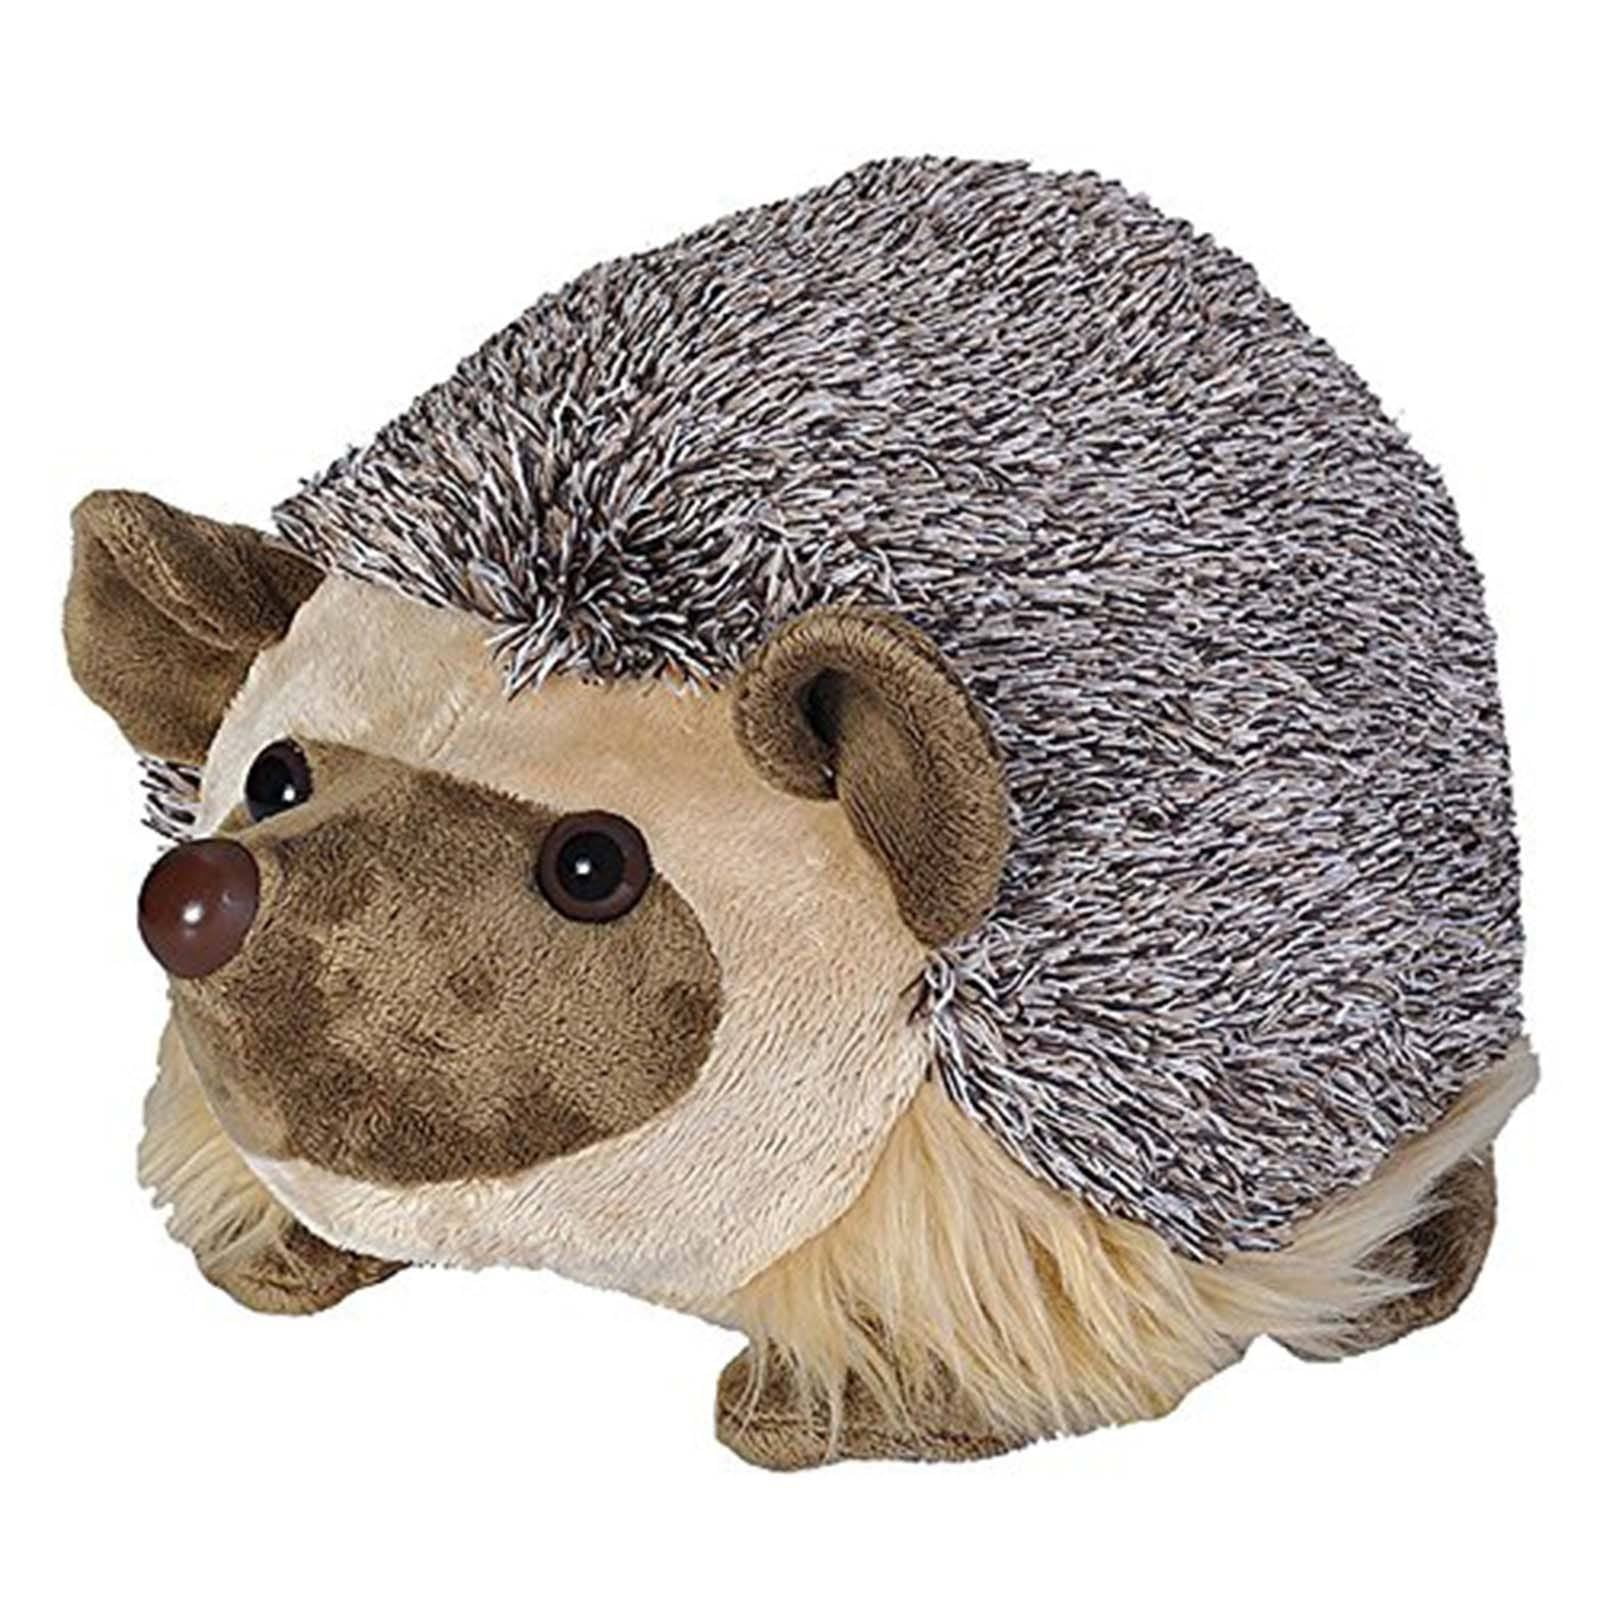 Cuddlekins Hedgehog Plush Stuffed Animal by Wild Republic, Kid Gifts, Zoo Animals, 12 ...